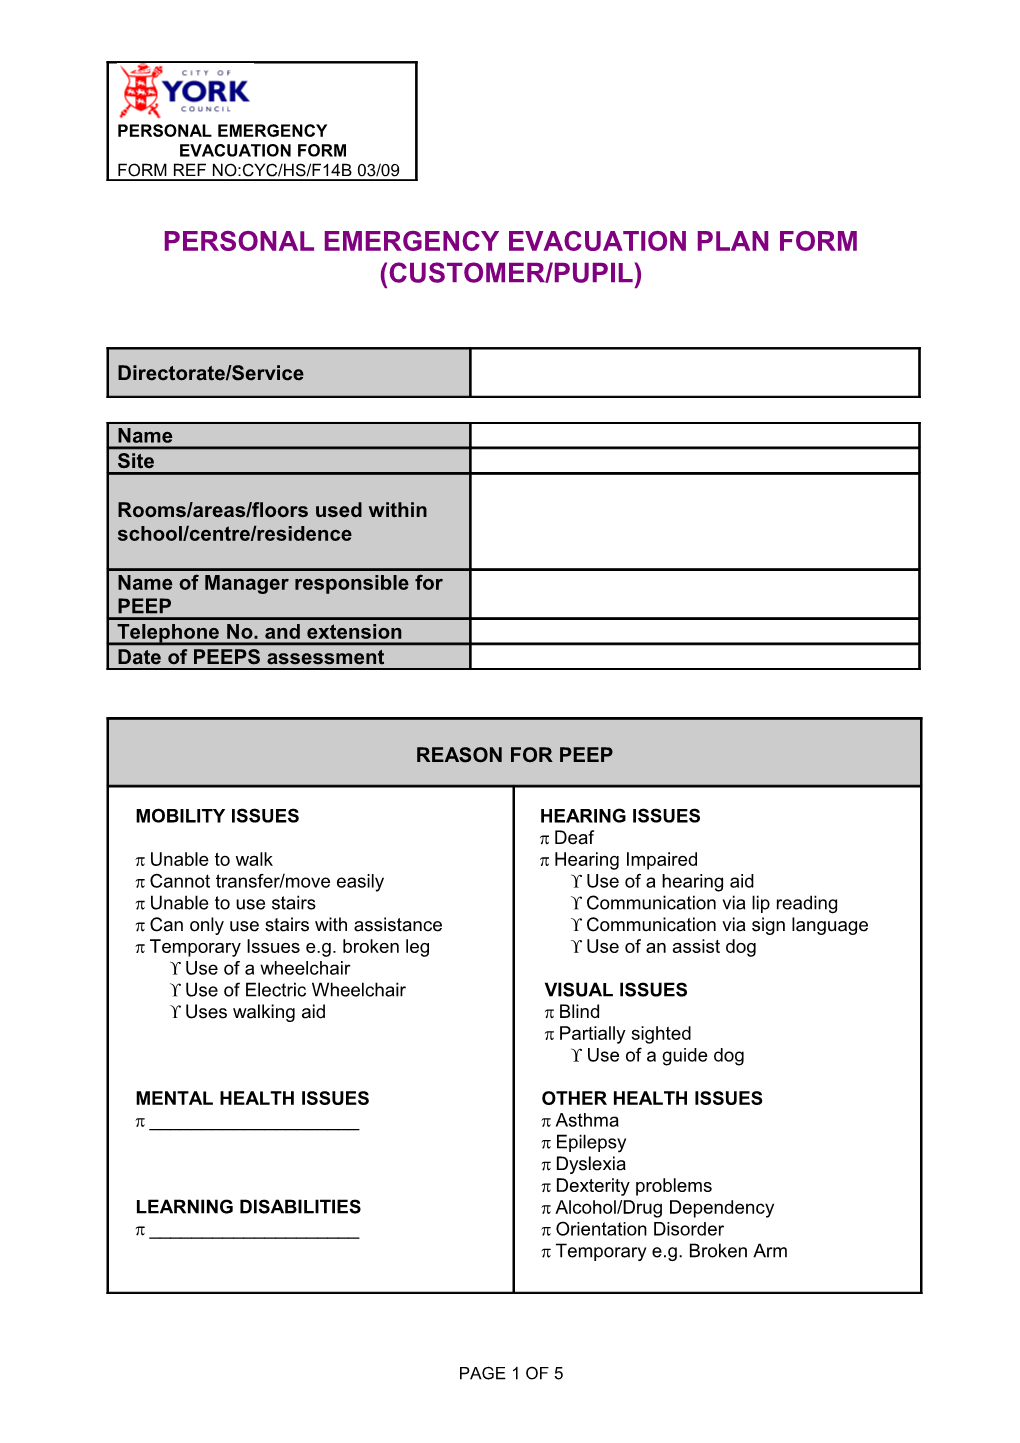 Personal Emergency Evacuation Plans